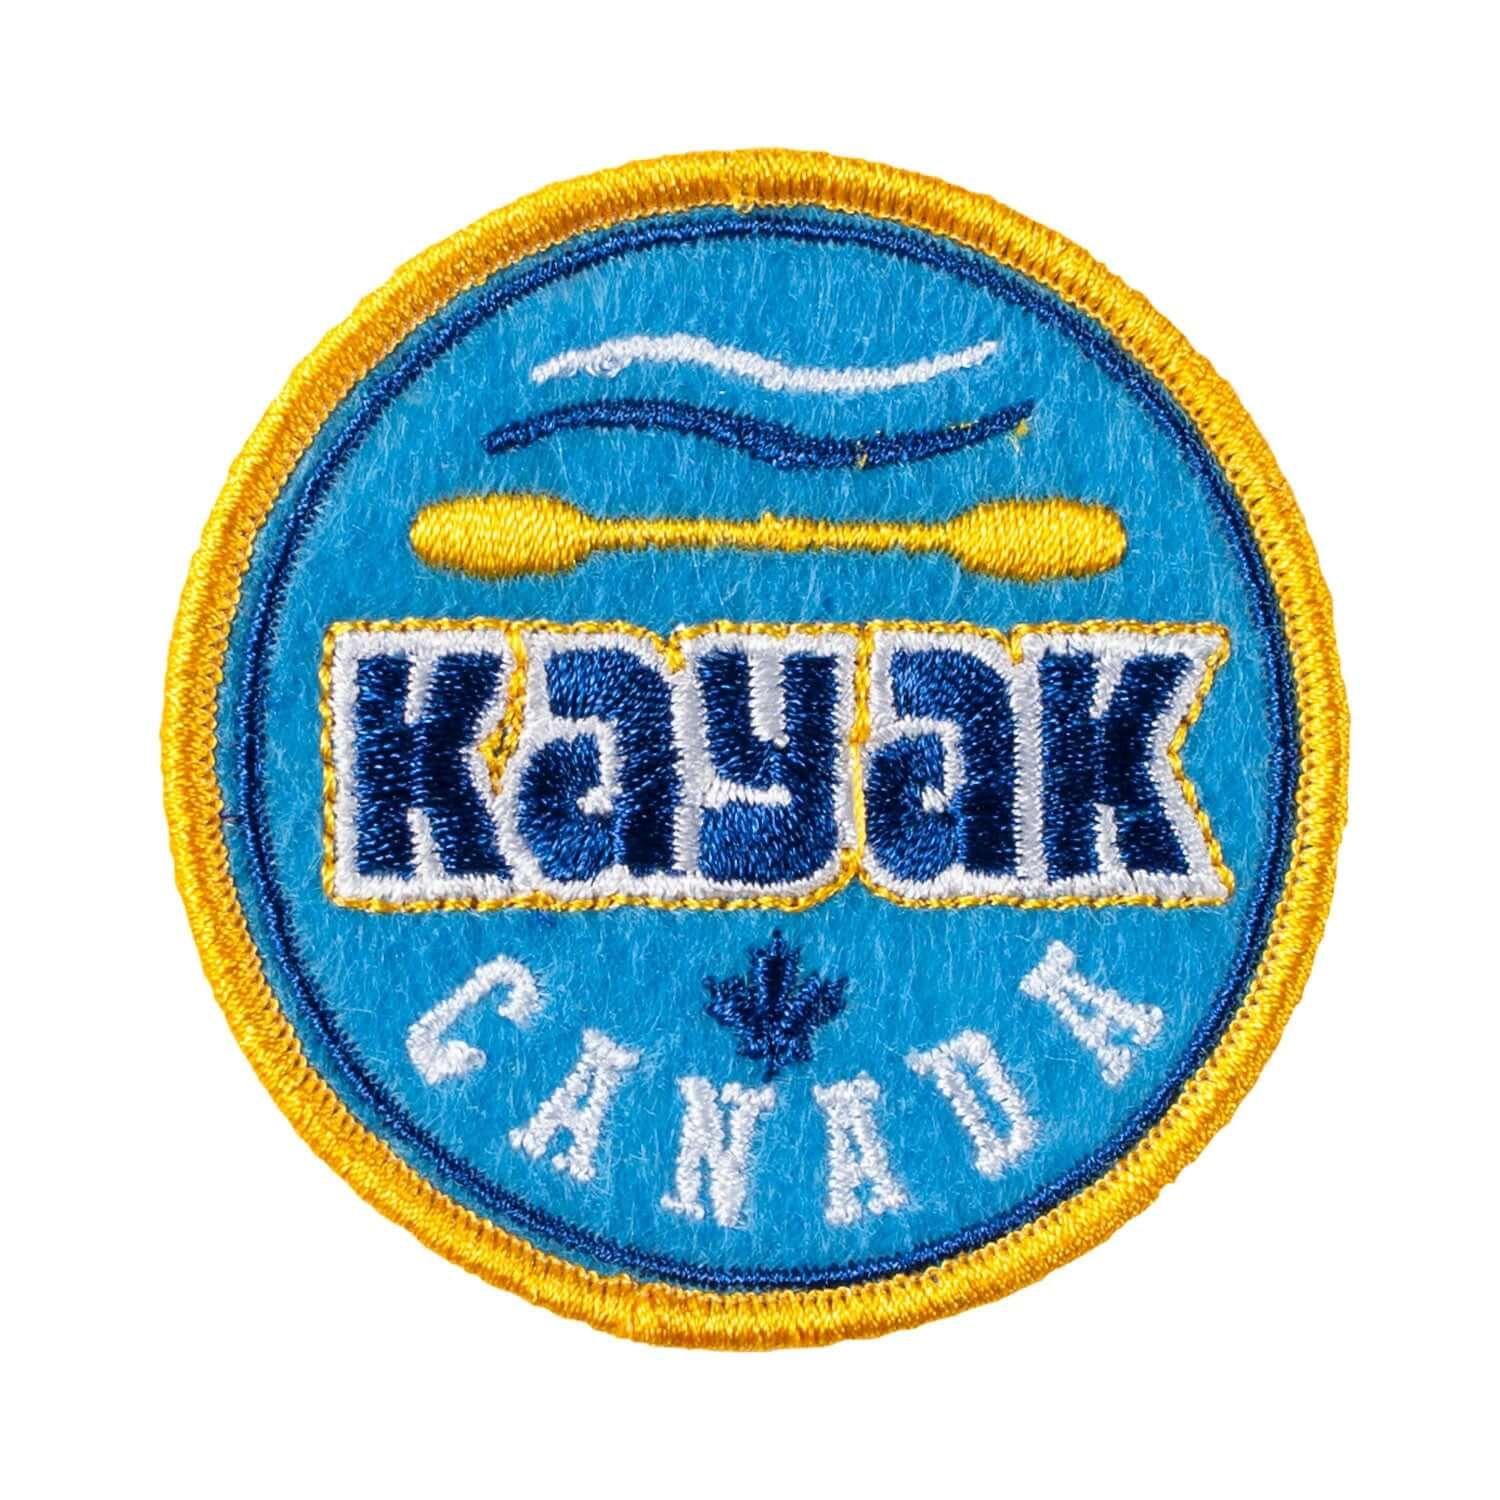 Kayak Canada Iron On Patch - Rocket Factory Apparel